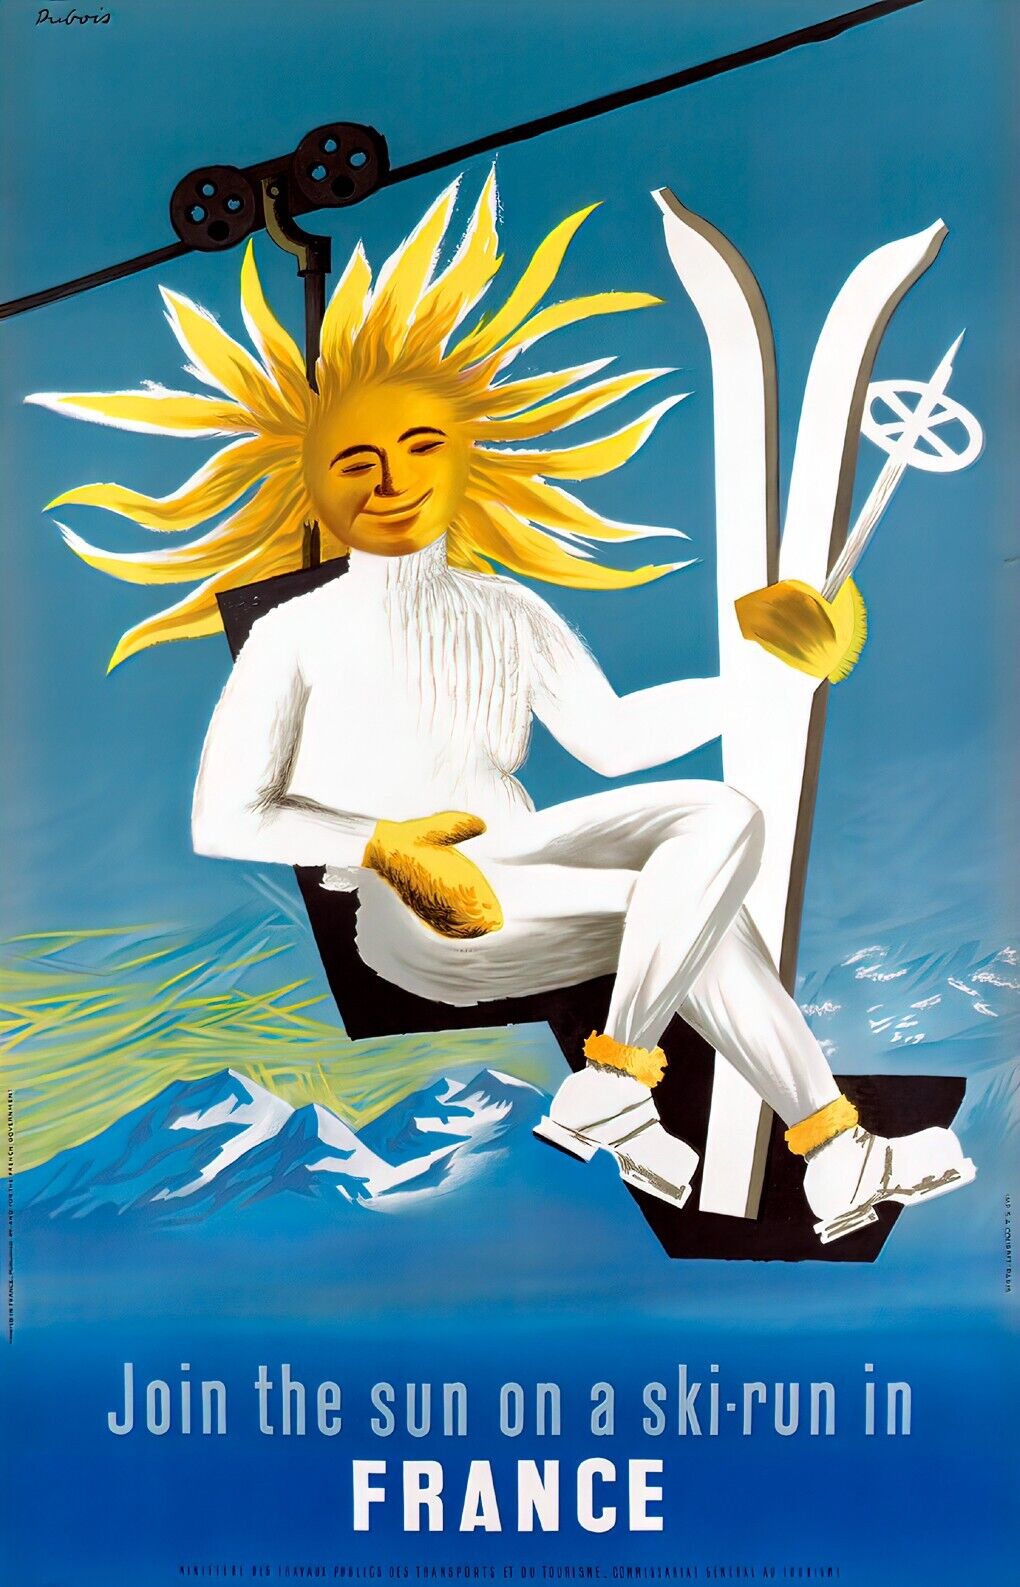 Join the sun on a ski run litho posters..Dubois artist circa 1955.